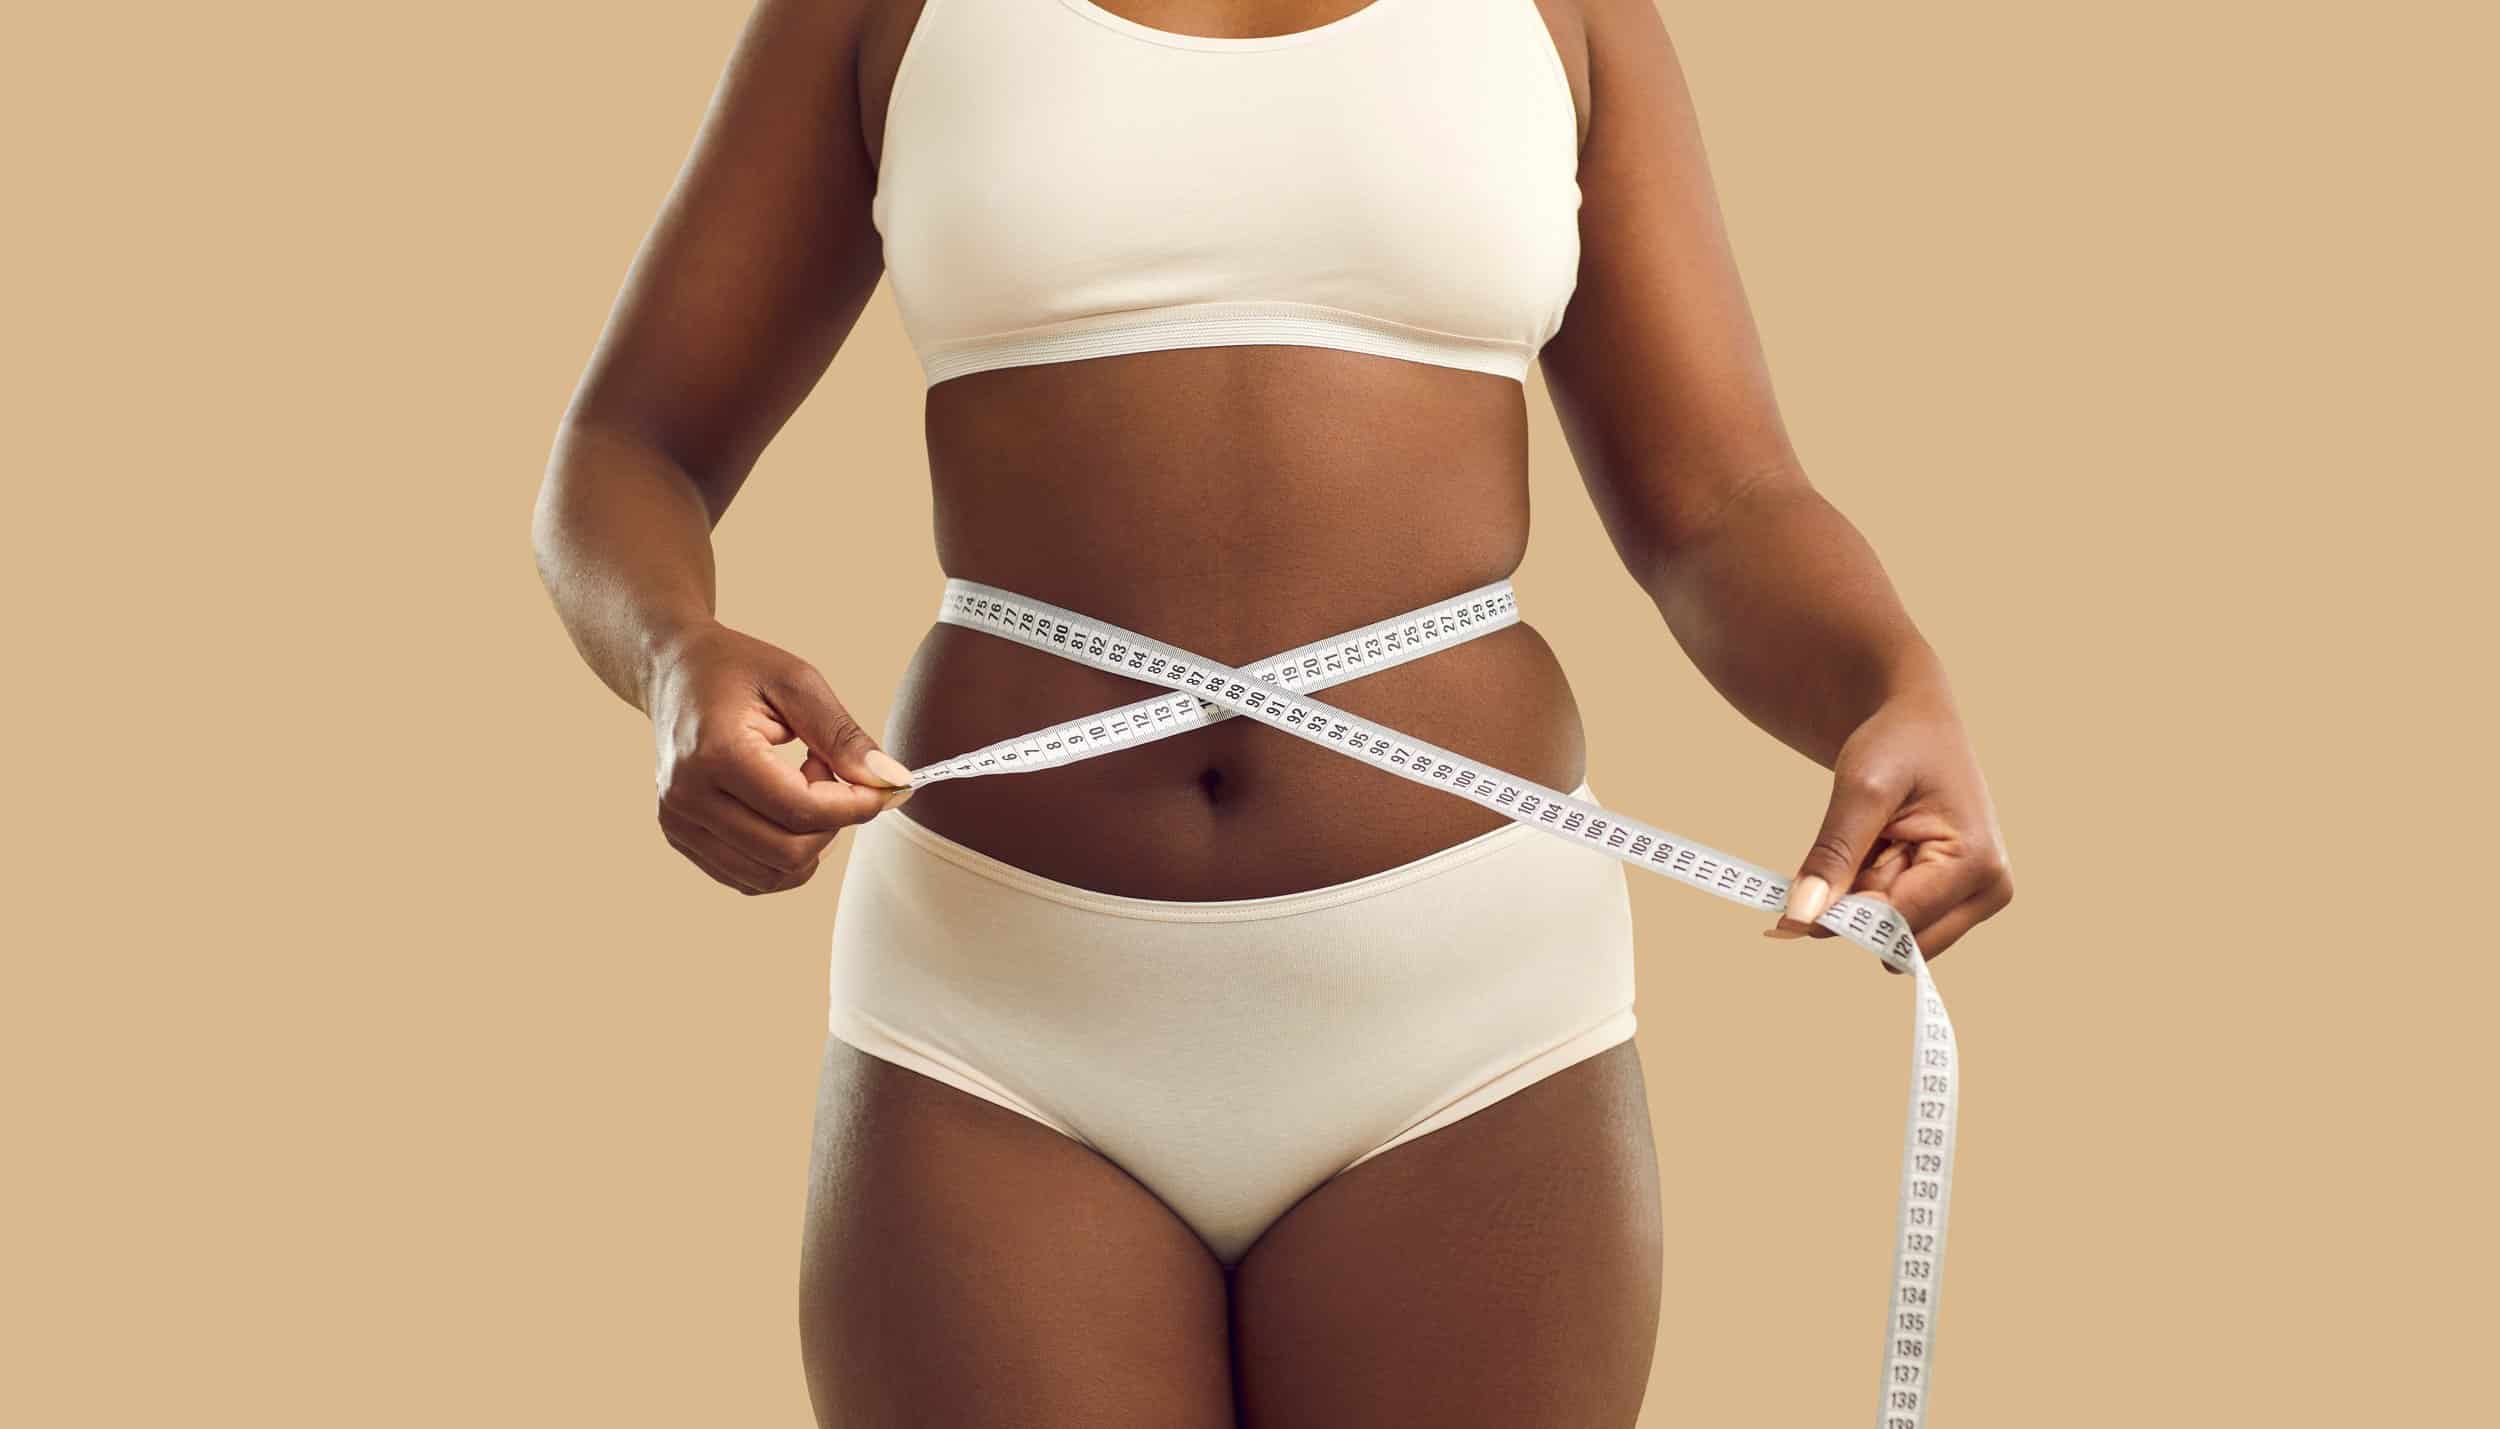 Black woman in underwear measure waist with tape